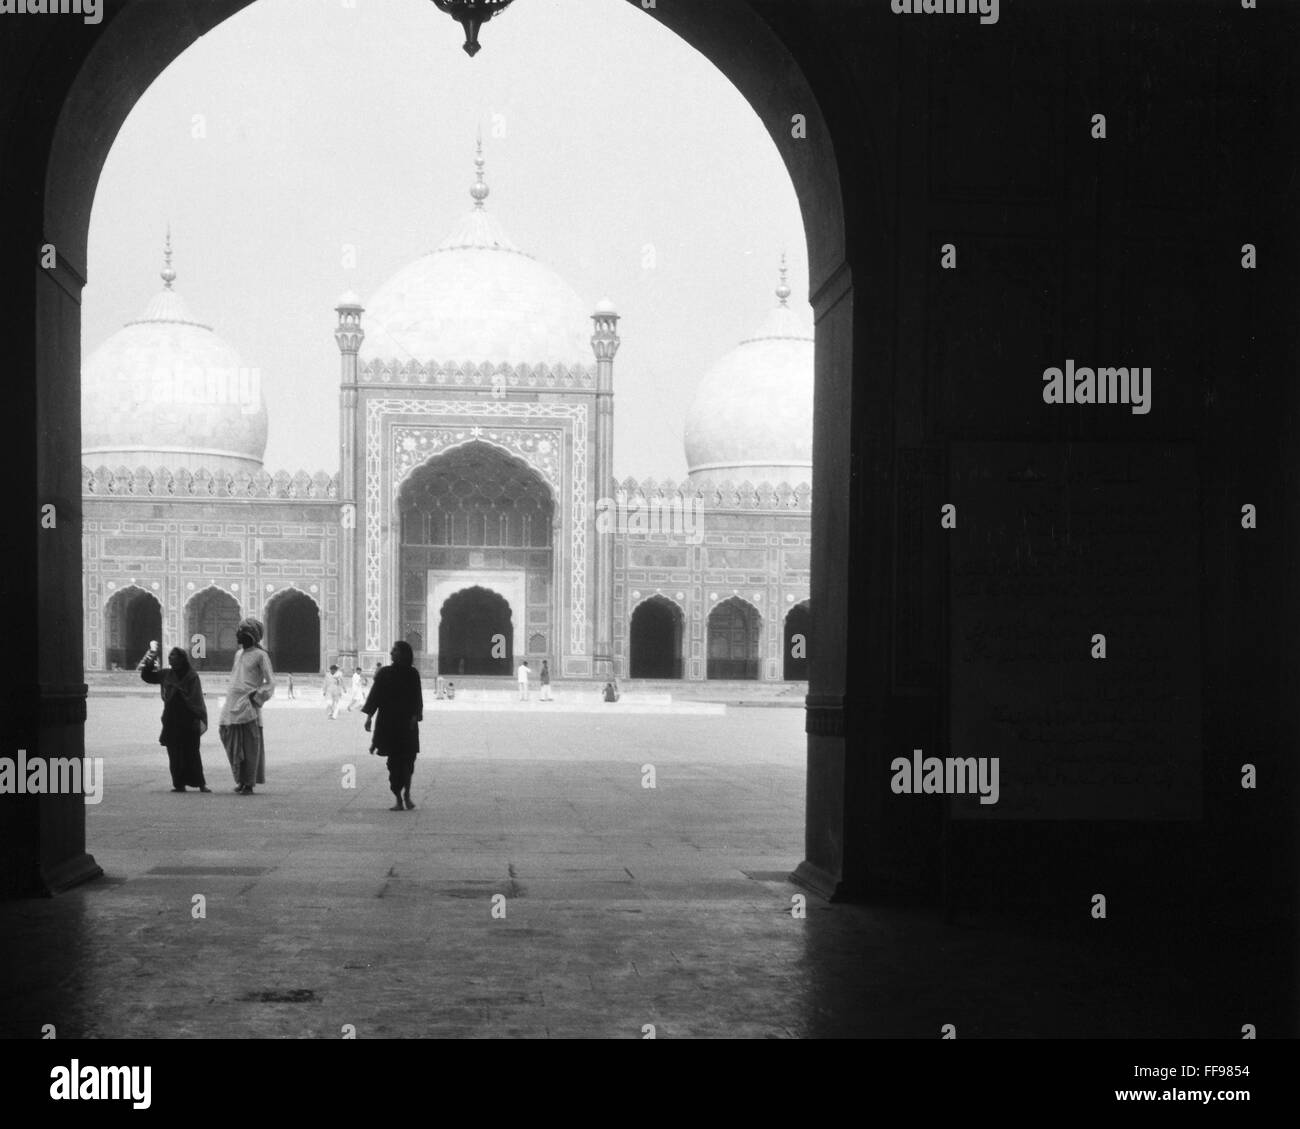 ISLAM: BADHSHAHI MOSQUE. /nThe Badhshahi (Royal) Mosque at Lahore ...